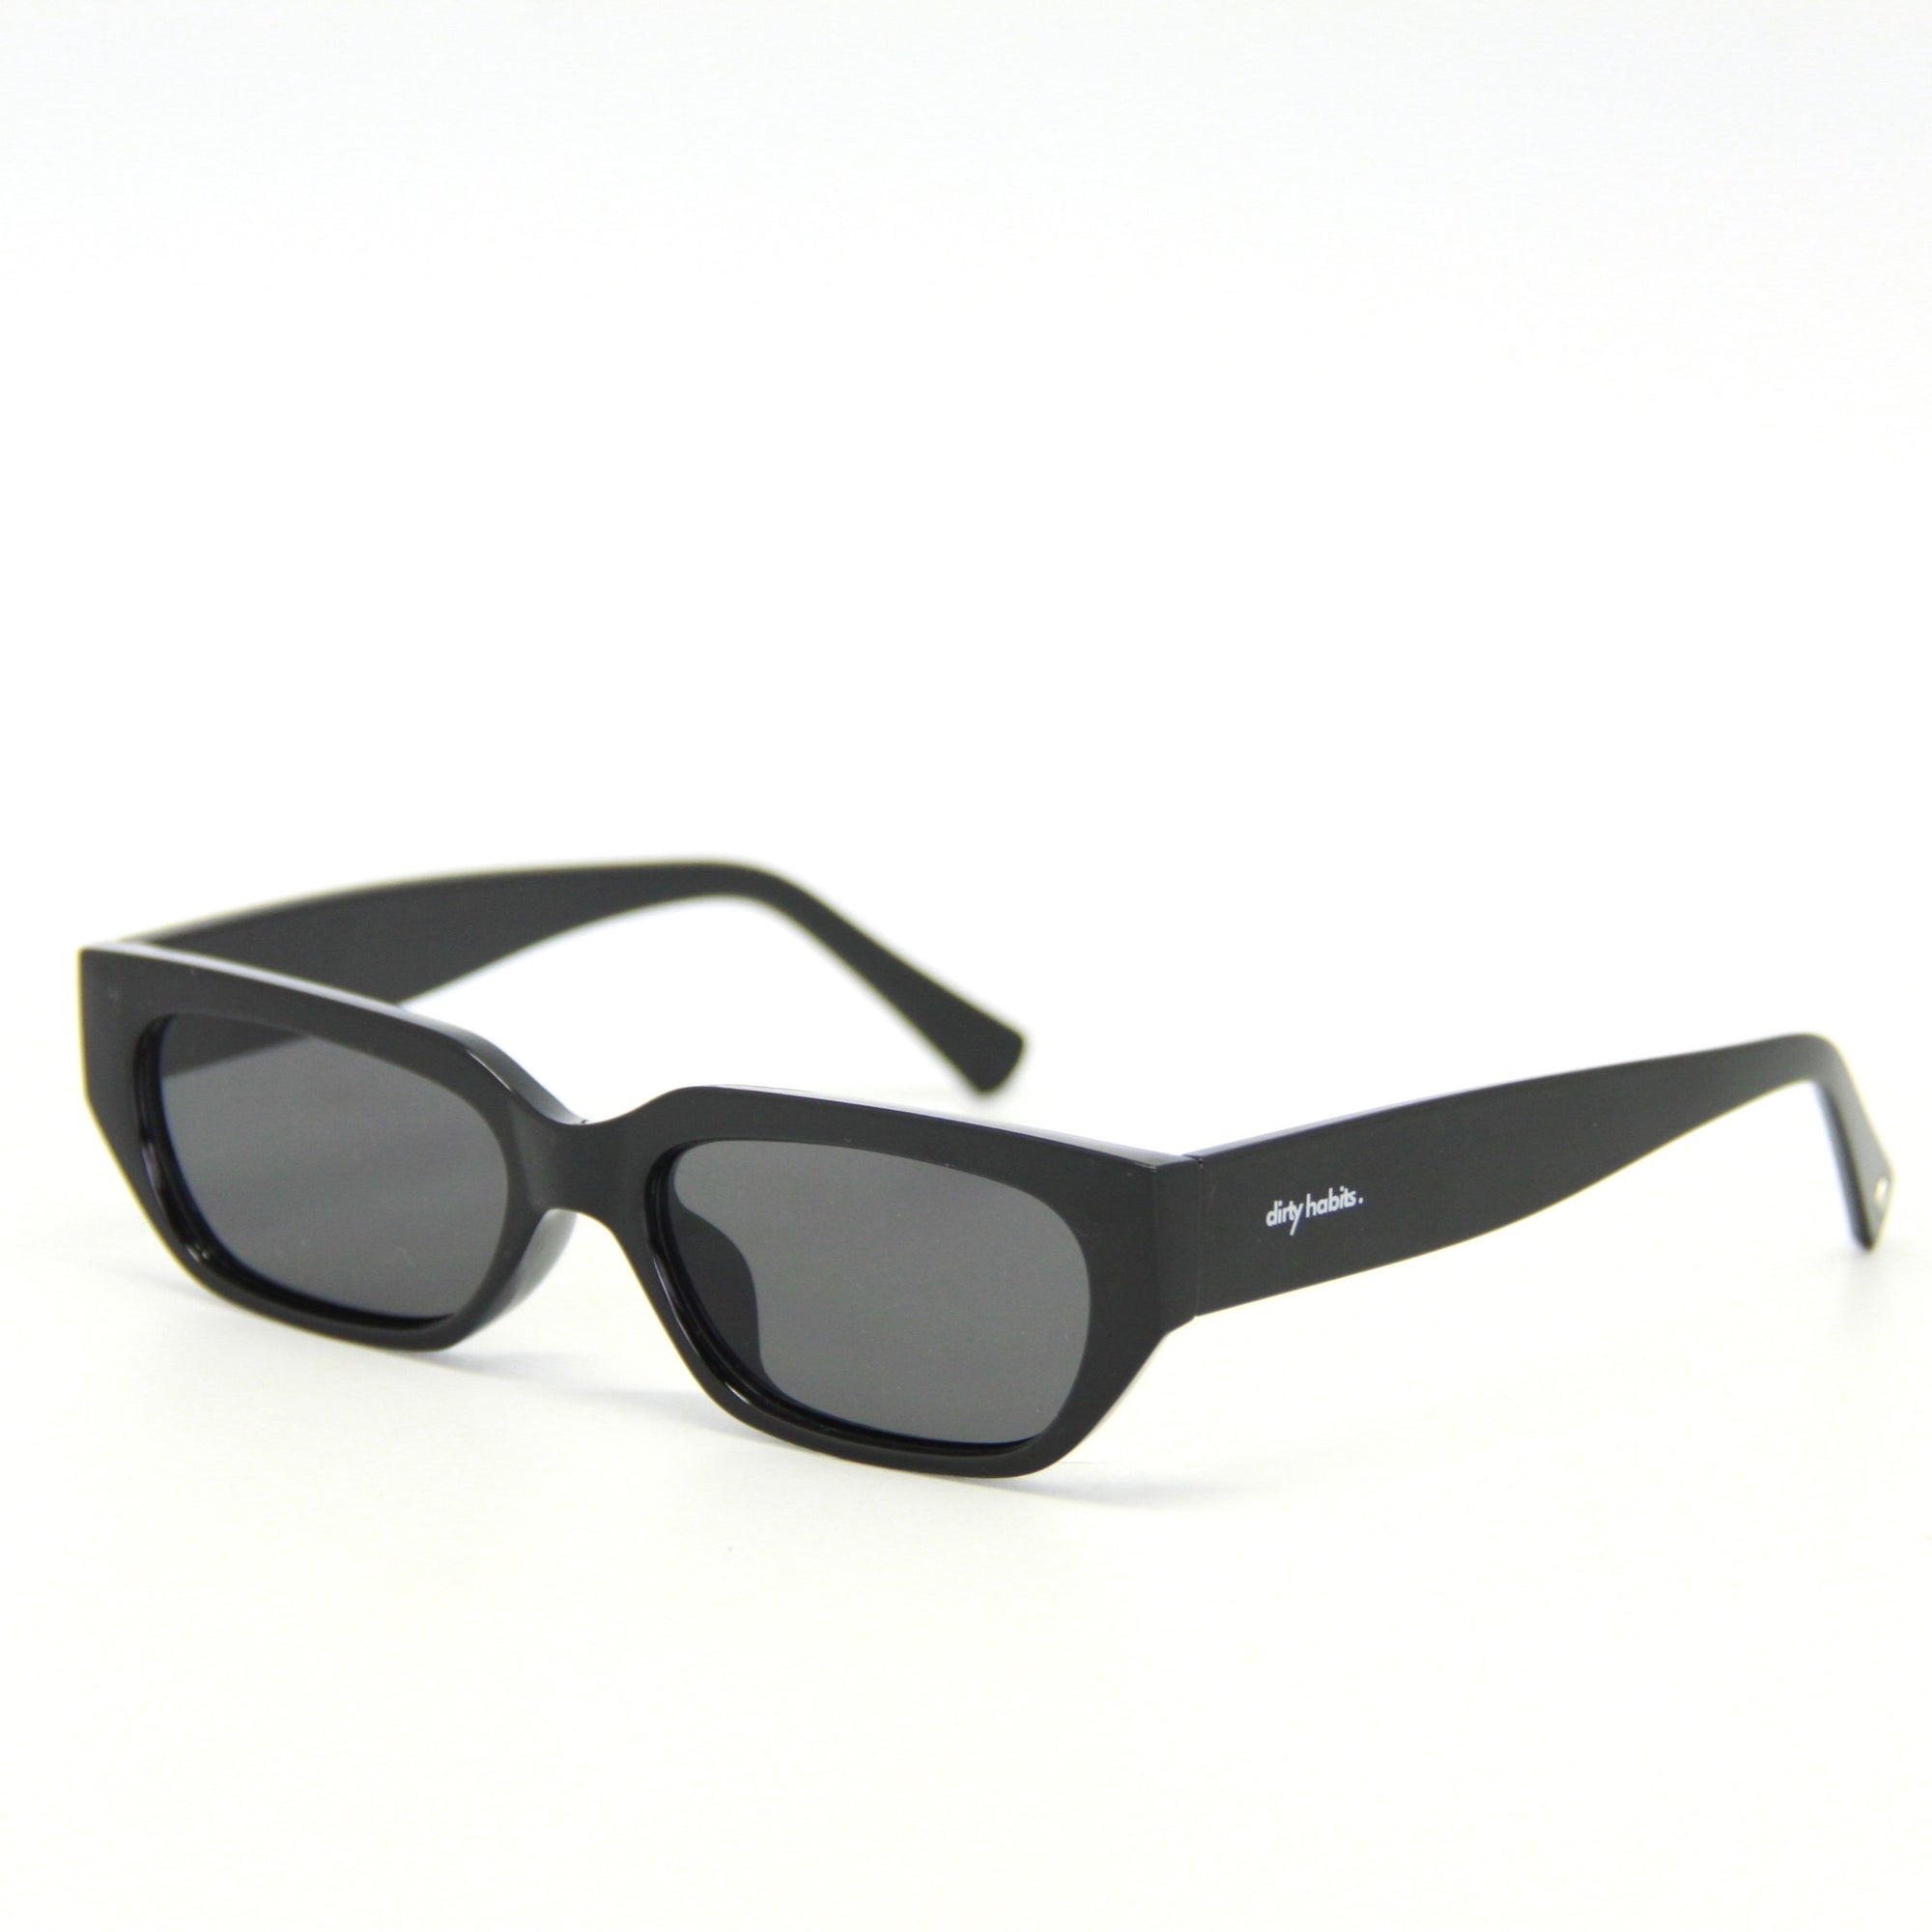 Dirty Habits Sunglasses / DHS124